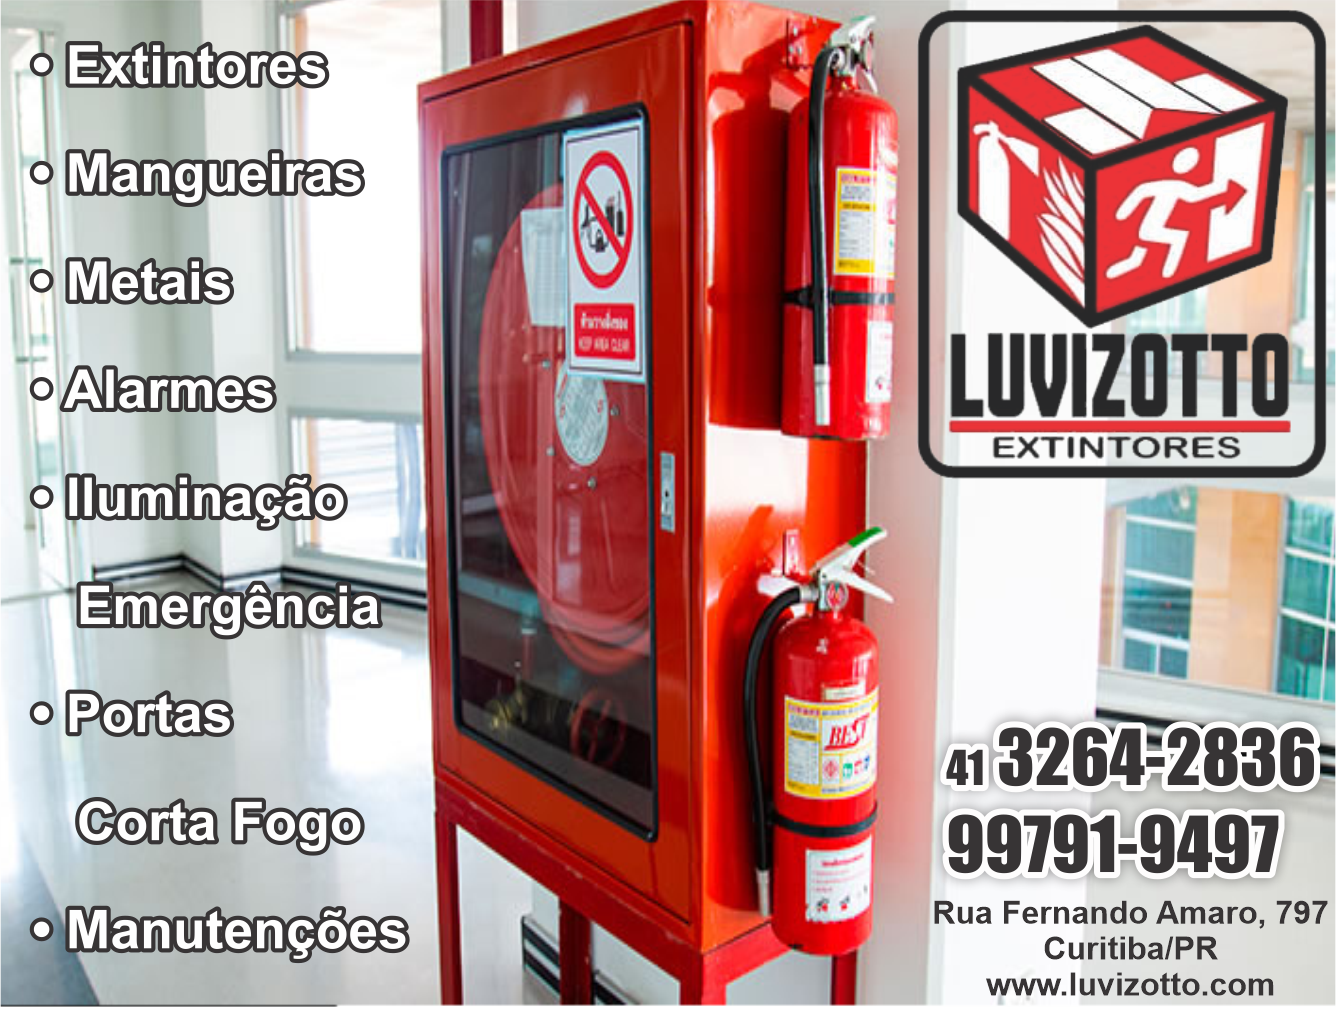 Luvizotto Extintores      RUA Fernando Amaro - de 591/592 a 1074/1075 , 737, CURITIBA - PR  Fones: (41) 99649-1030 / (41) 99971-4889